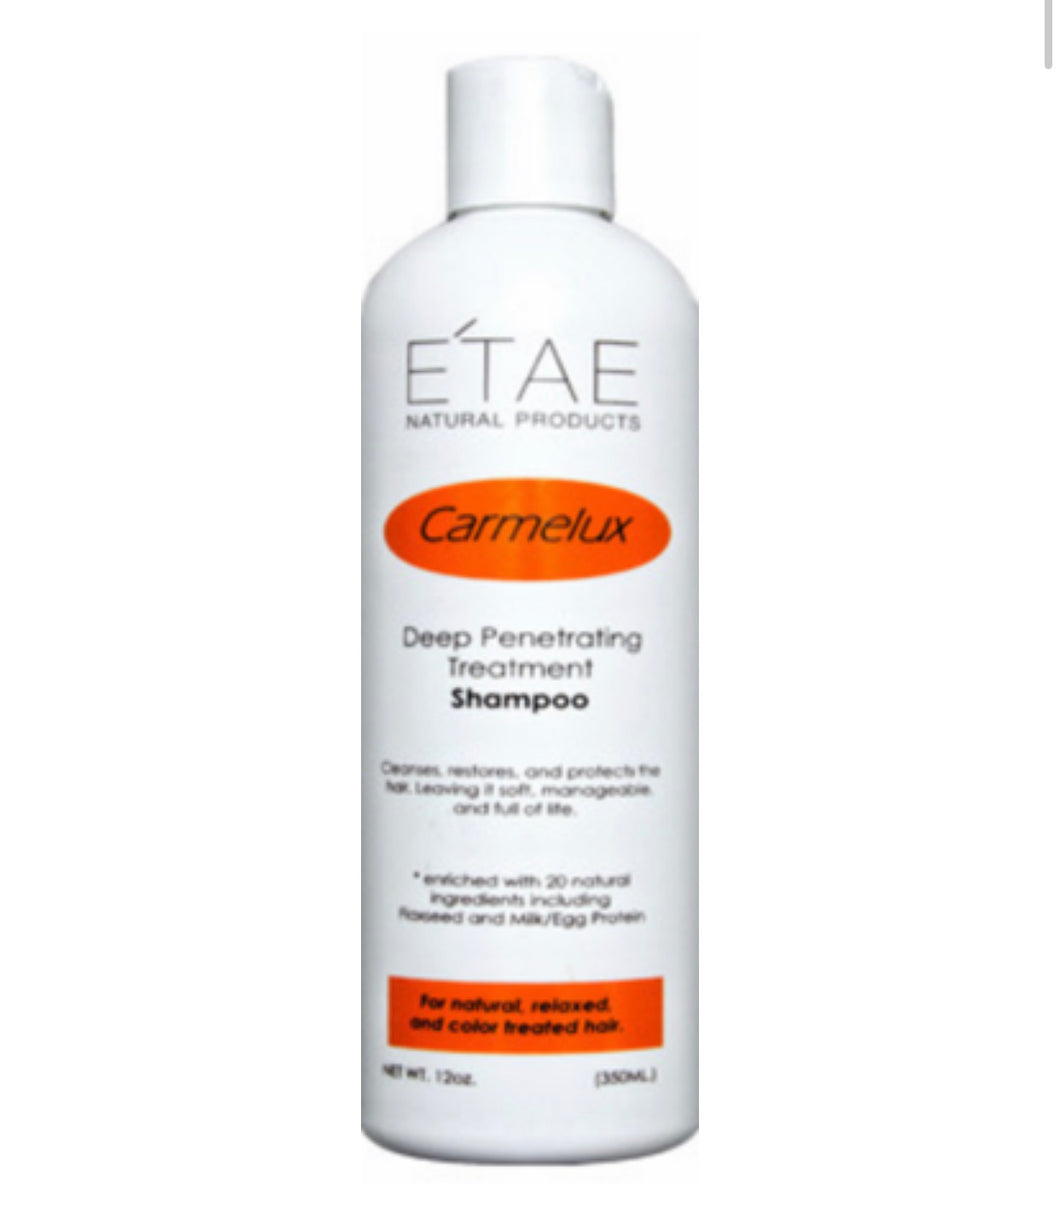 E’TAE Carmelux Deep Penetrating Treatment Shampoo